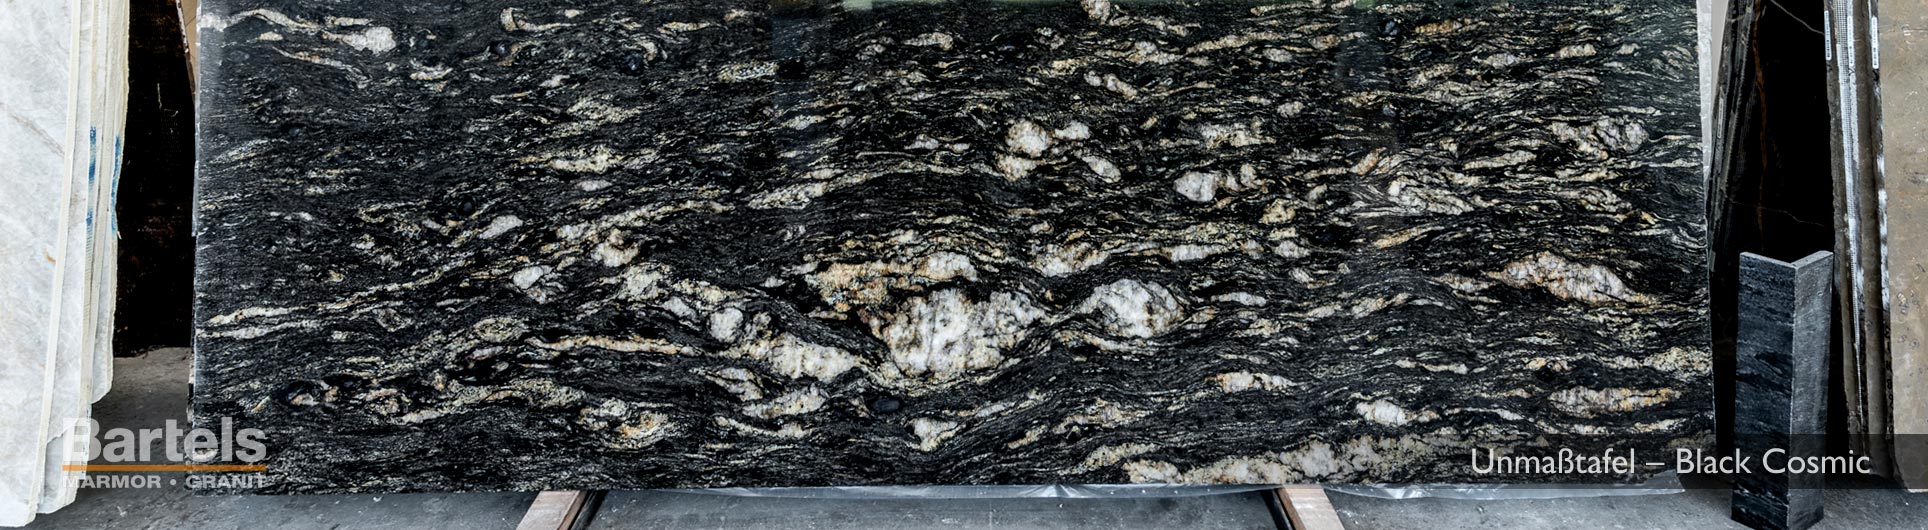 Unmaßtafel – Black Cosmic, Granit